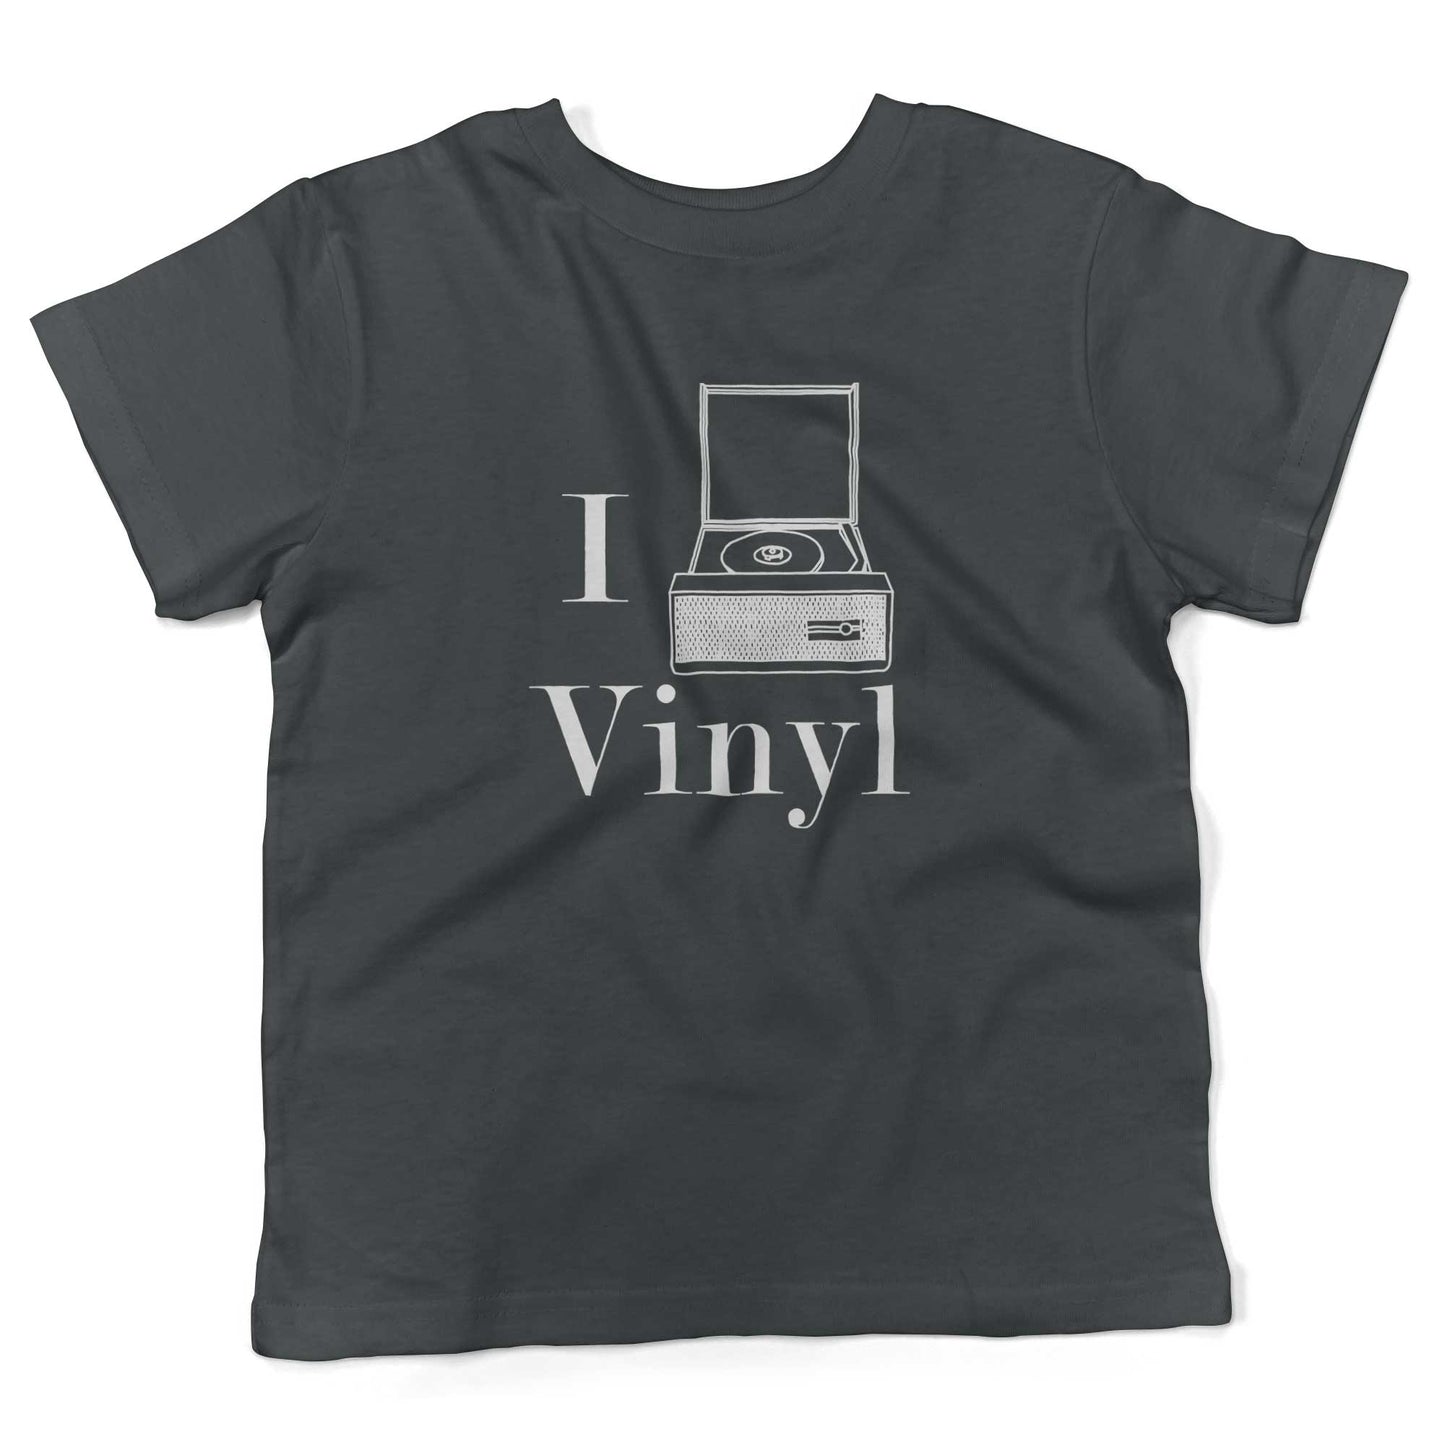 I Play Vinyl Toddler Shirt-Asphalt-2T